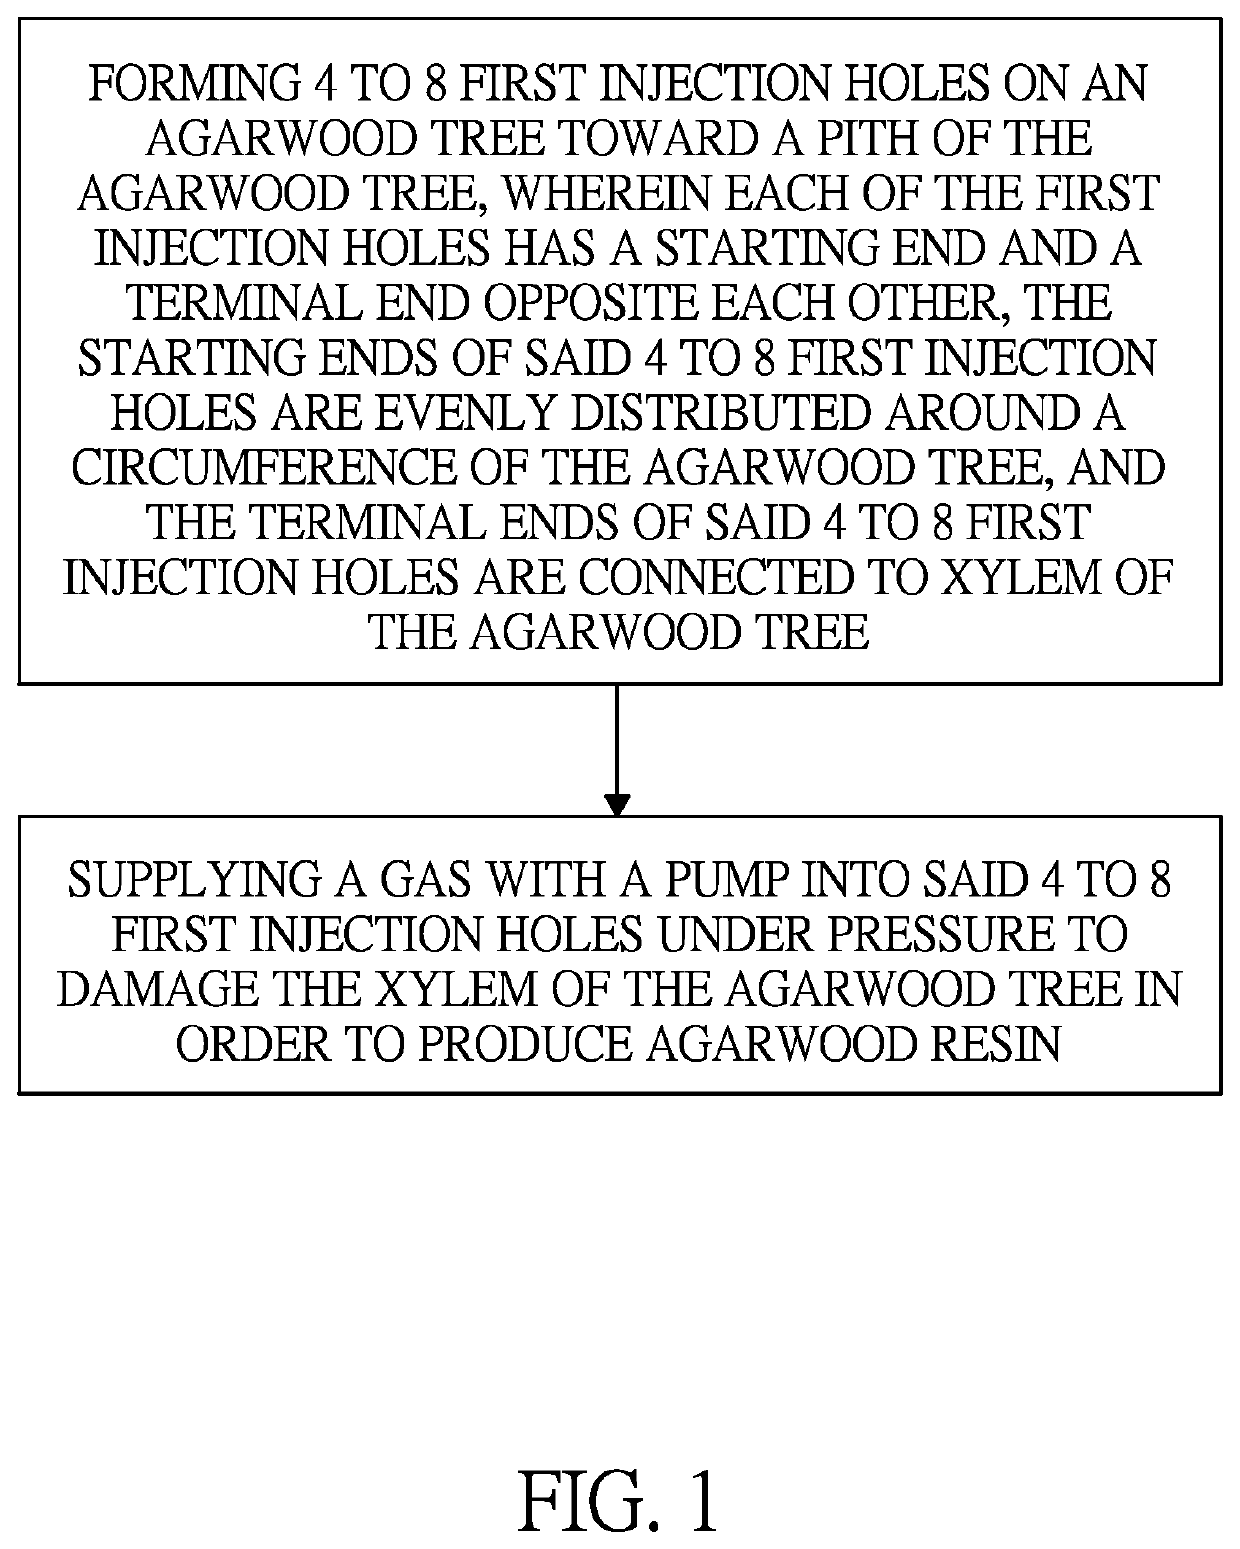 Method of producing agarwood resin